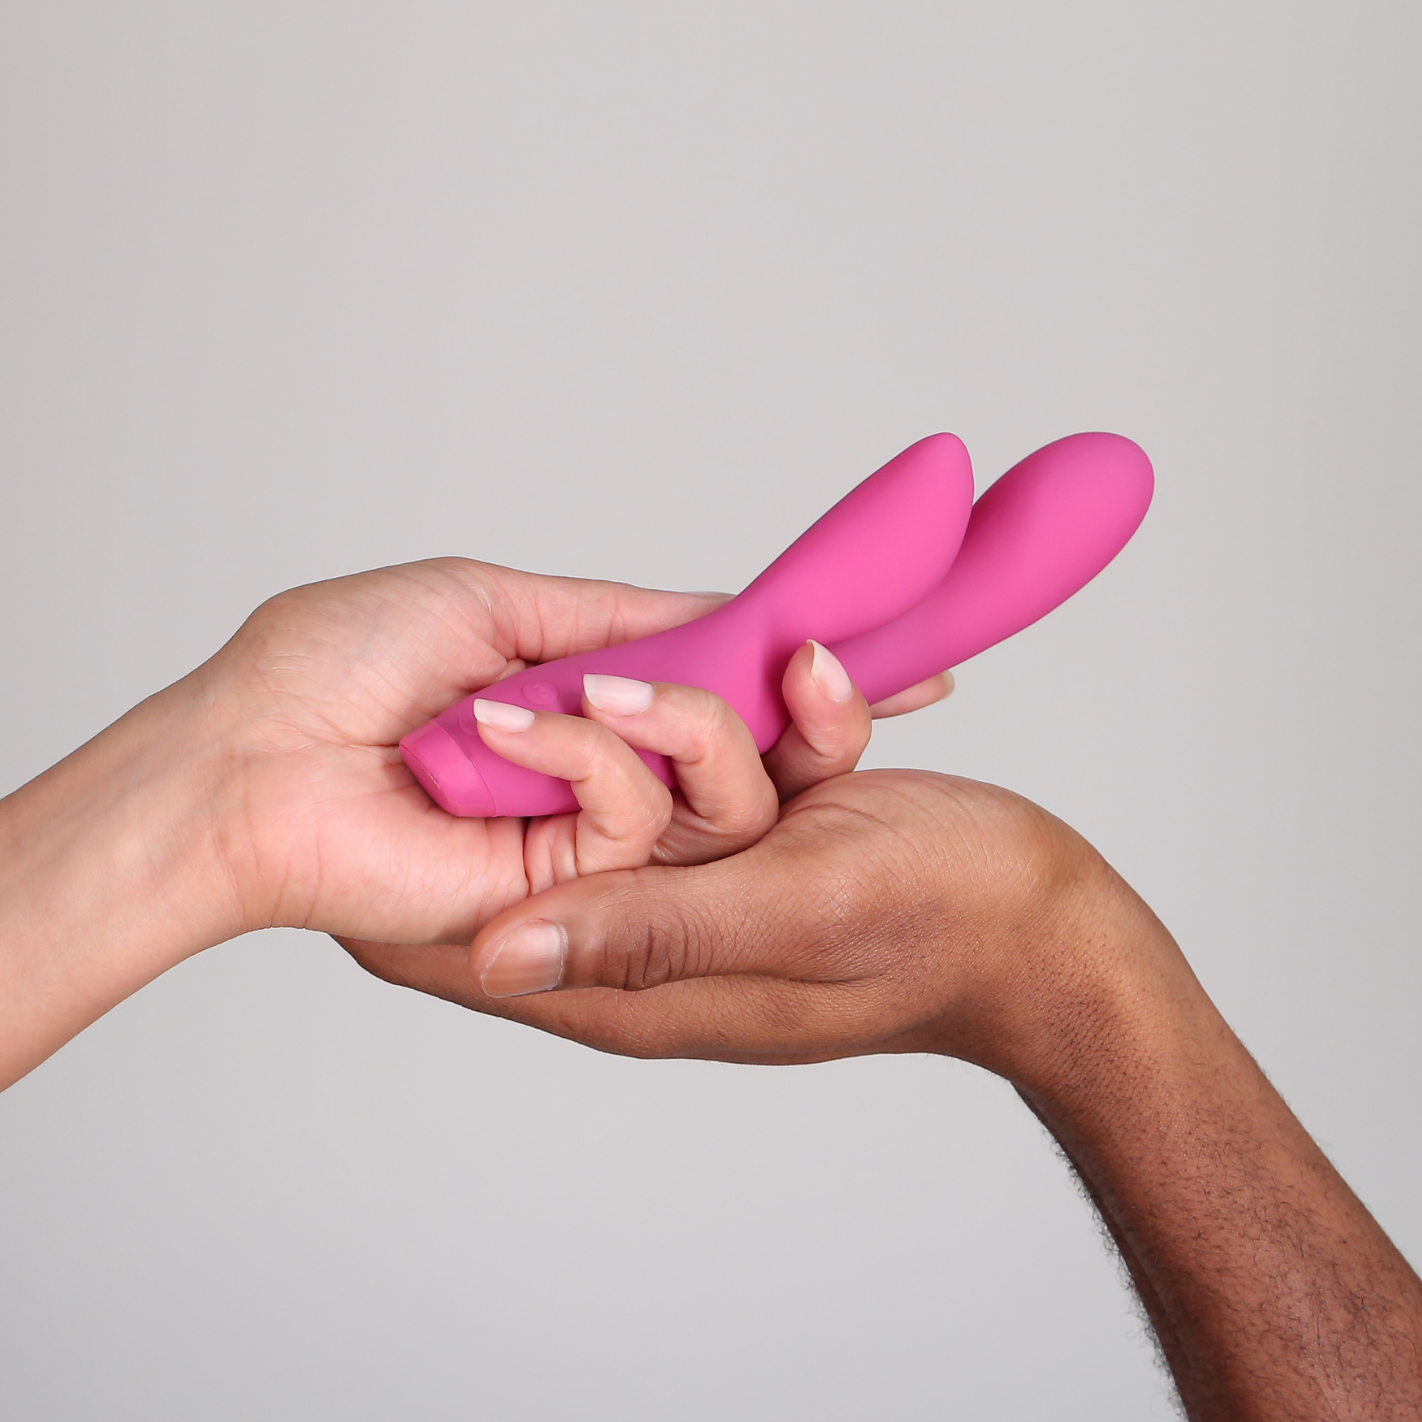 Hands holding Pink Hera vibrator on plain background 